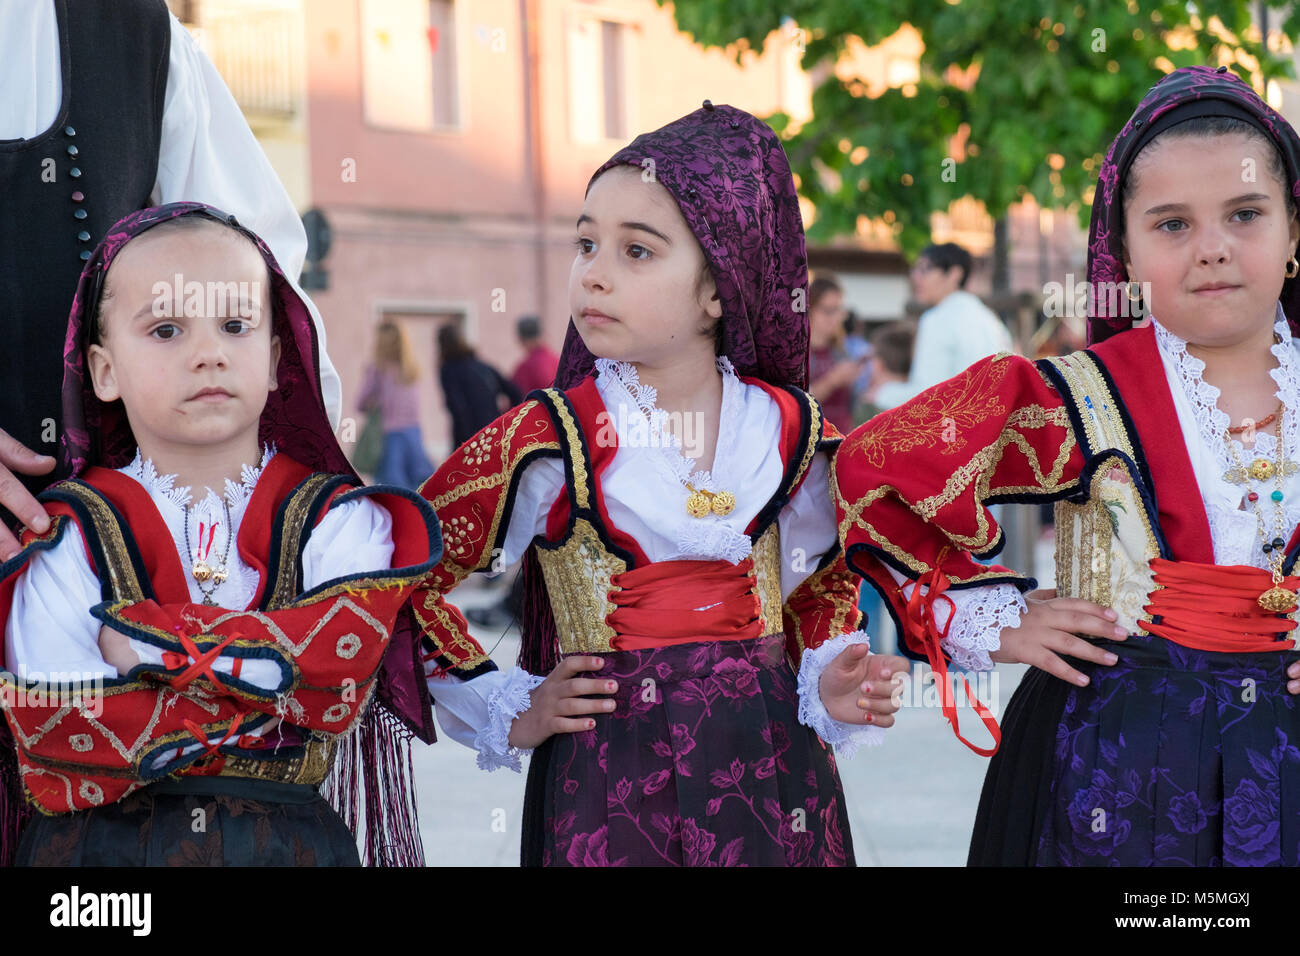 Les gens en costumes colorés pendant la Festa di San Simplicio, Sardaigne, Italie Banque D'Images